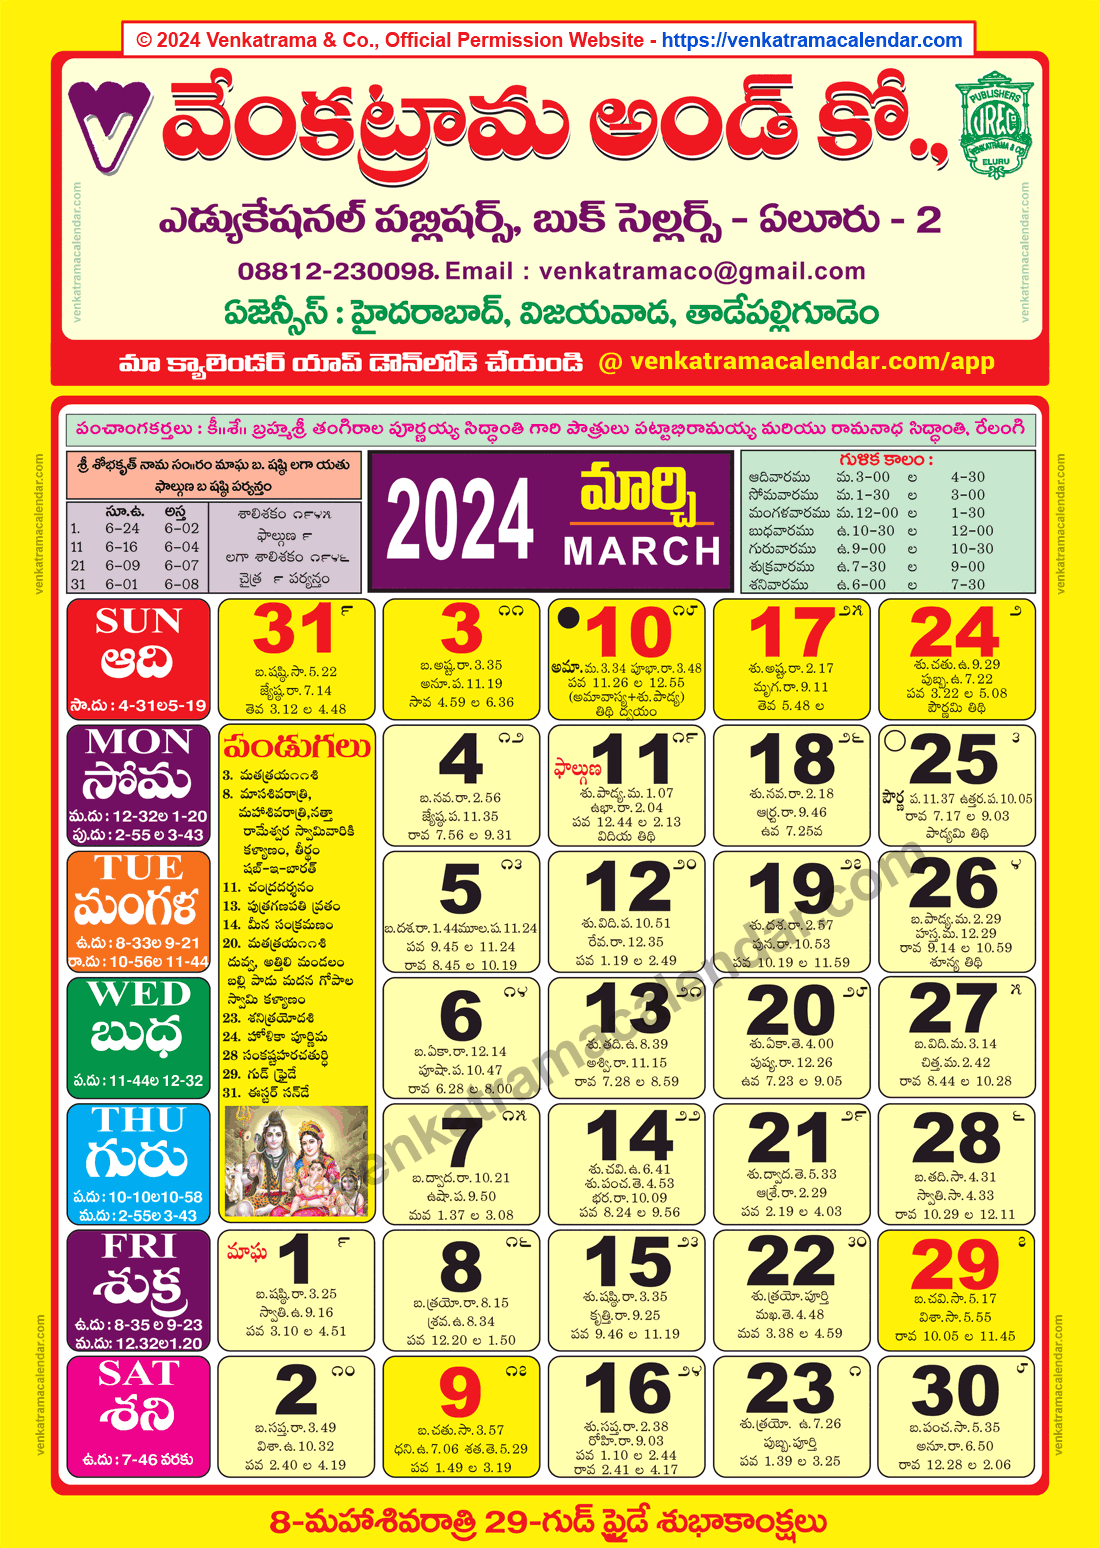 Venkatrama Calendar 2024 March Venkatrama Telugu Calendar 2024